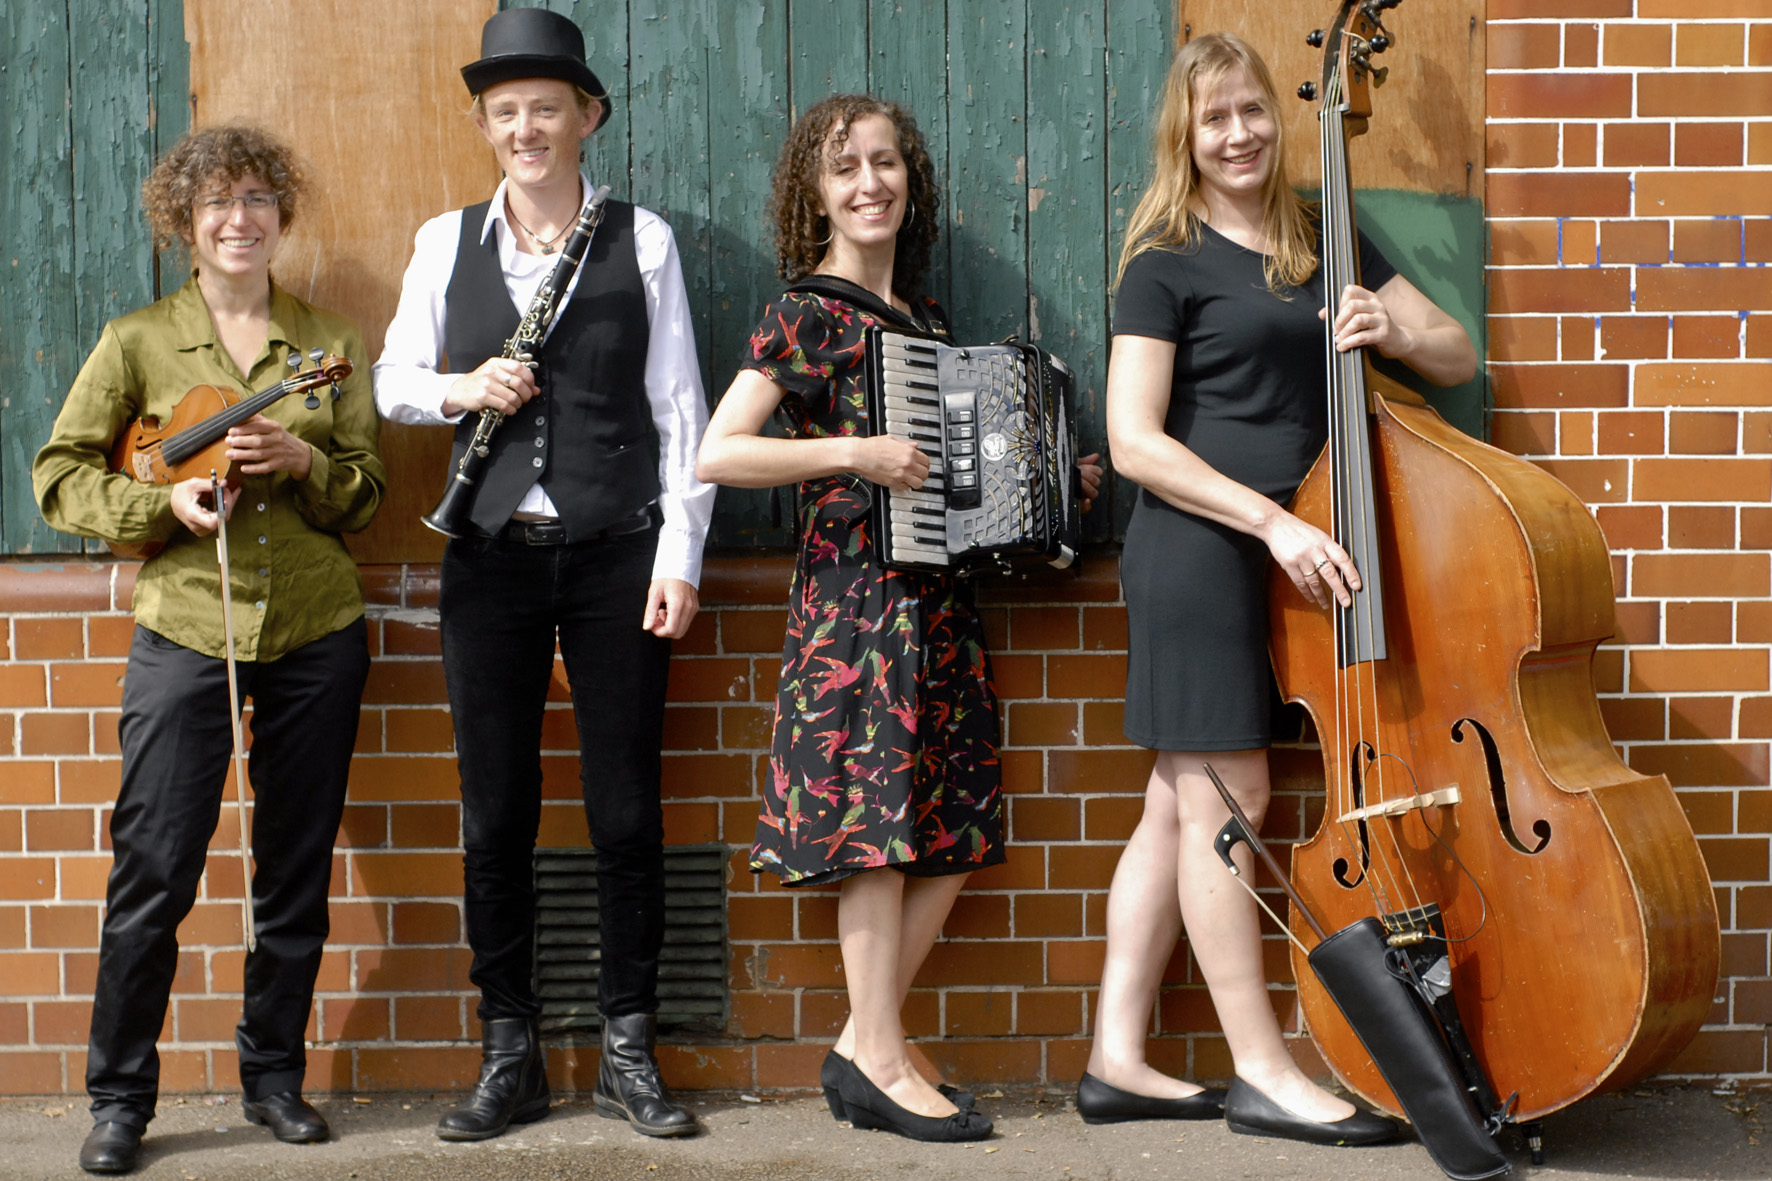 The London Klezmer Quartet returns to Sydney